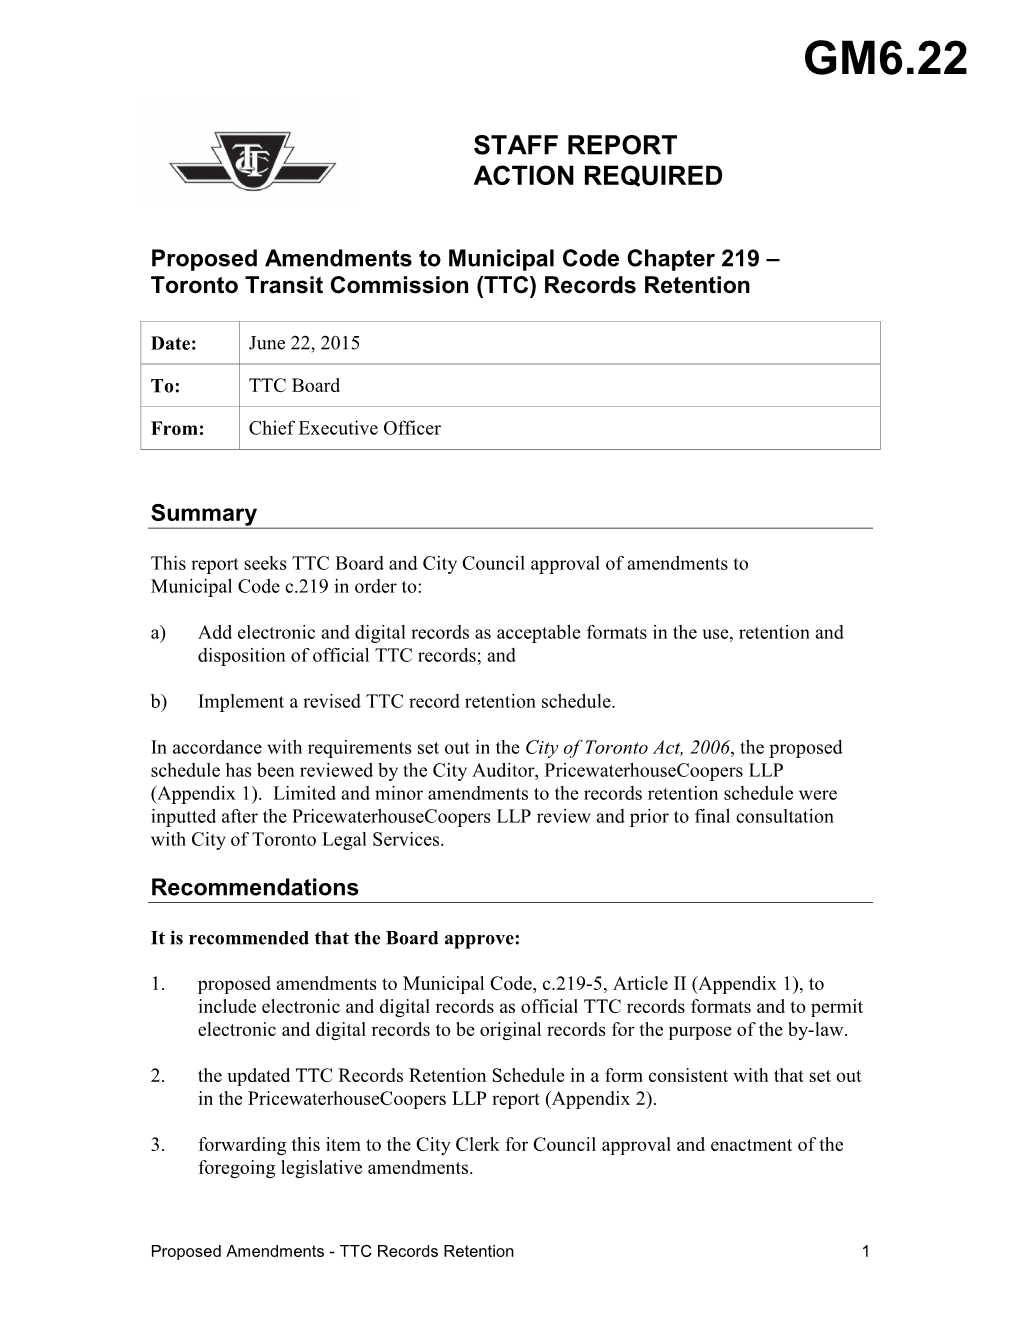 Proposed Amendments to Municipal Code Chapter 219 – Toronto Transit Commission (TTC) Records Retention